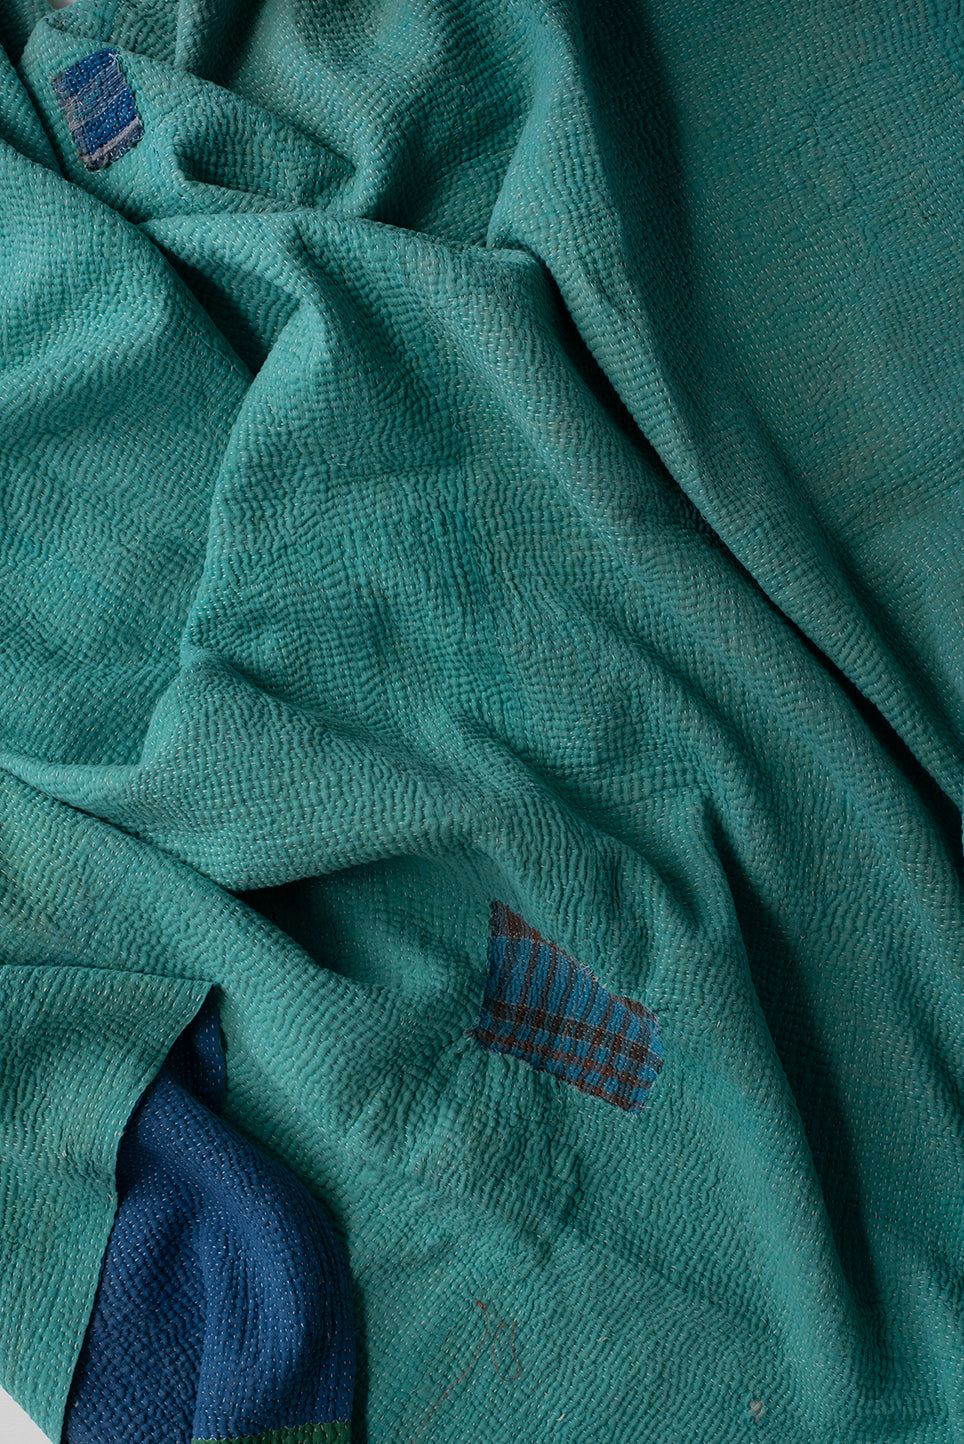 The Bluebell Quilt – Vintage Kantha Quilt